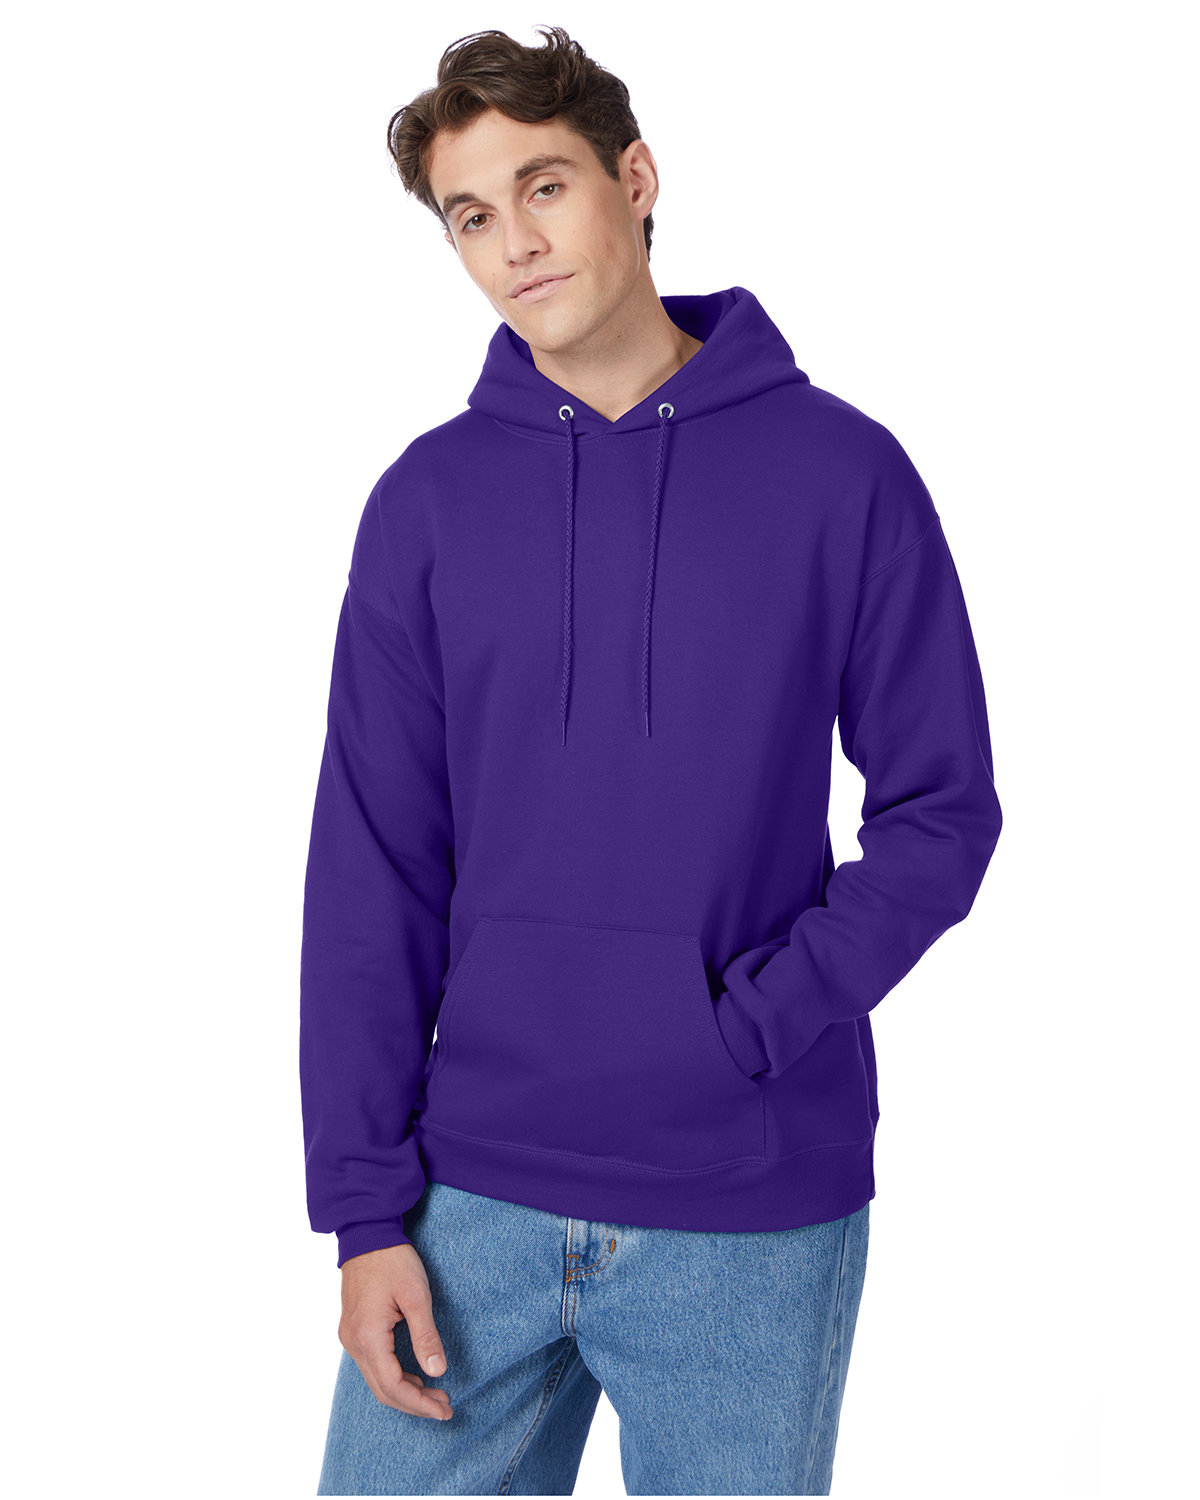 Hanes Unisex Ecosmart® 50/50 Pullover Hooded Sweatshirt PURPLE 